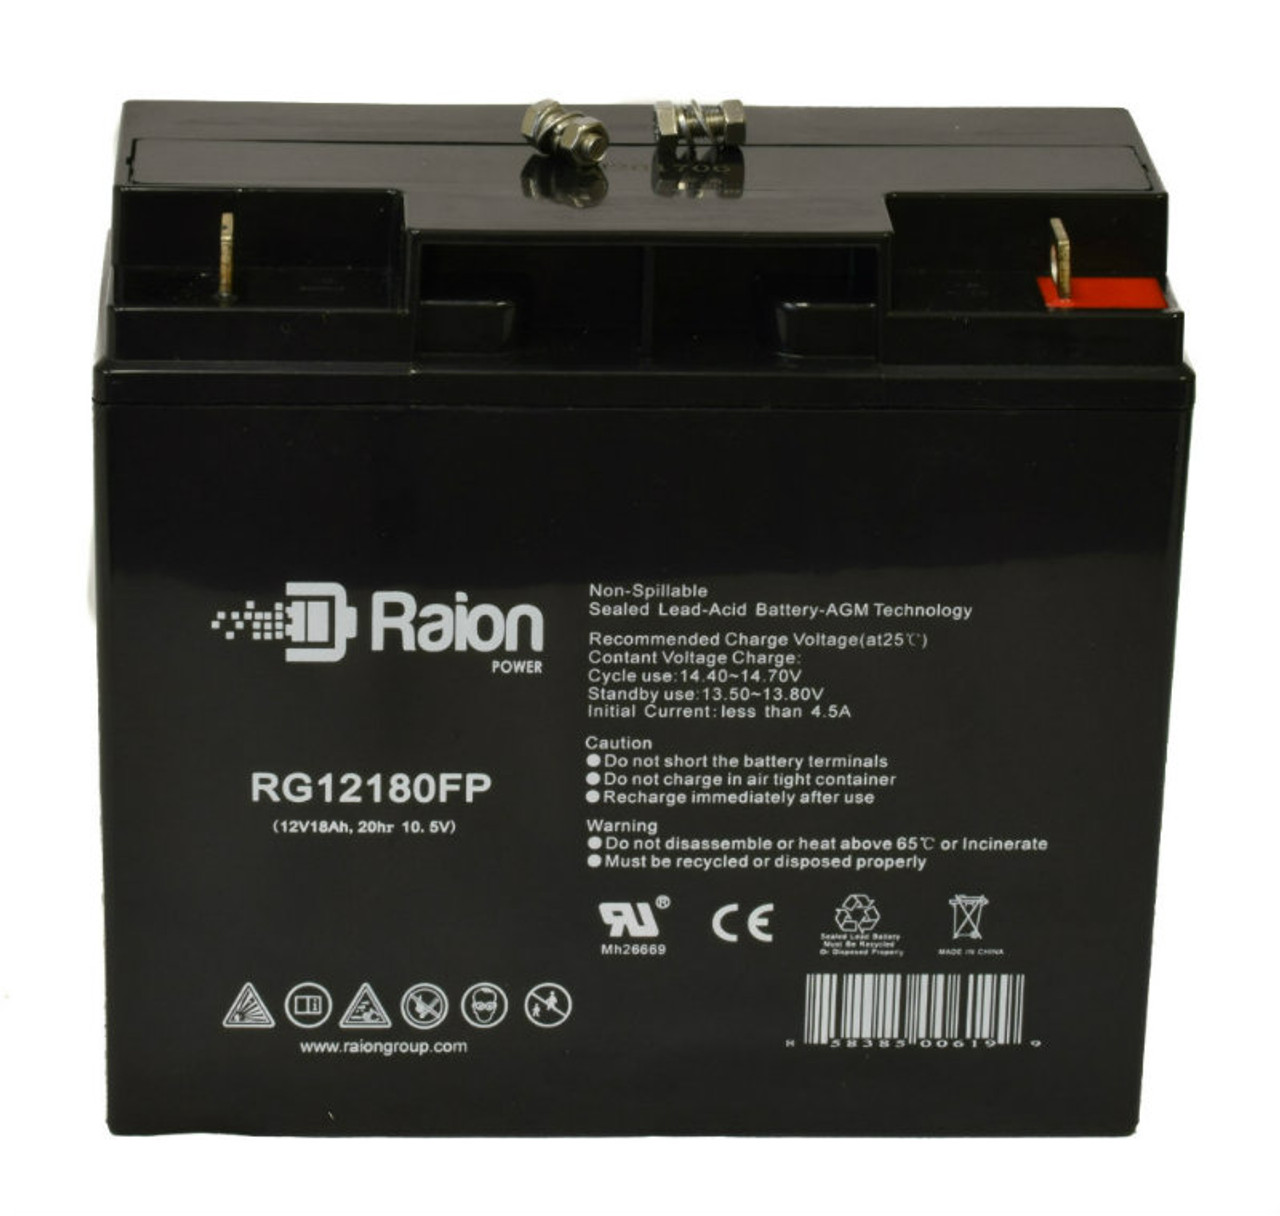 Raion Power RG12180FP 12V 18Ah Lead Acid Battery for Volt Canada XPRES